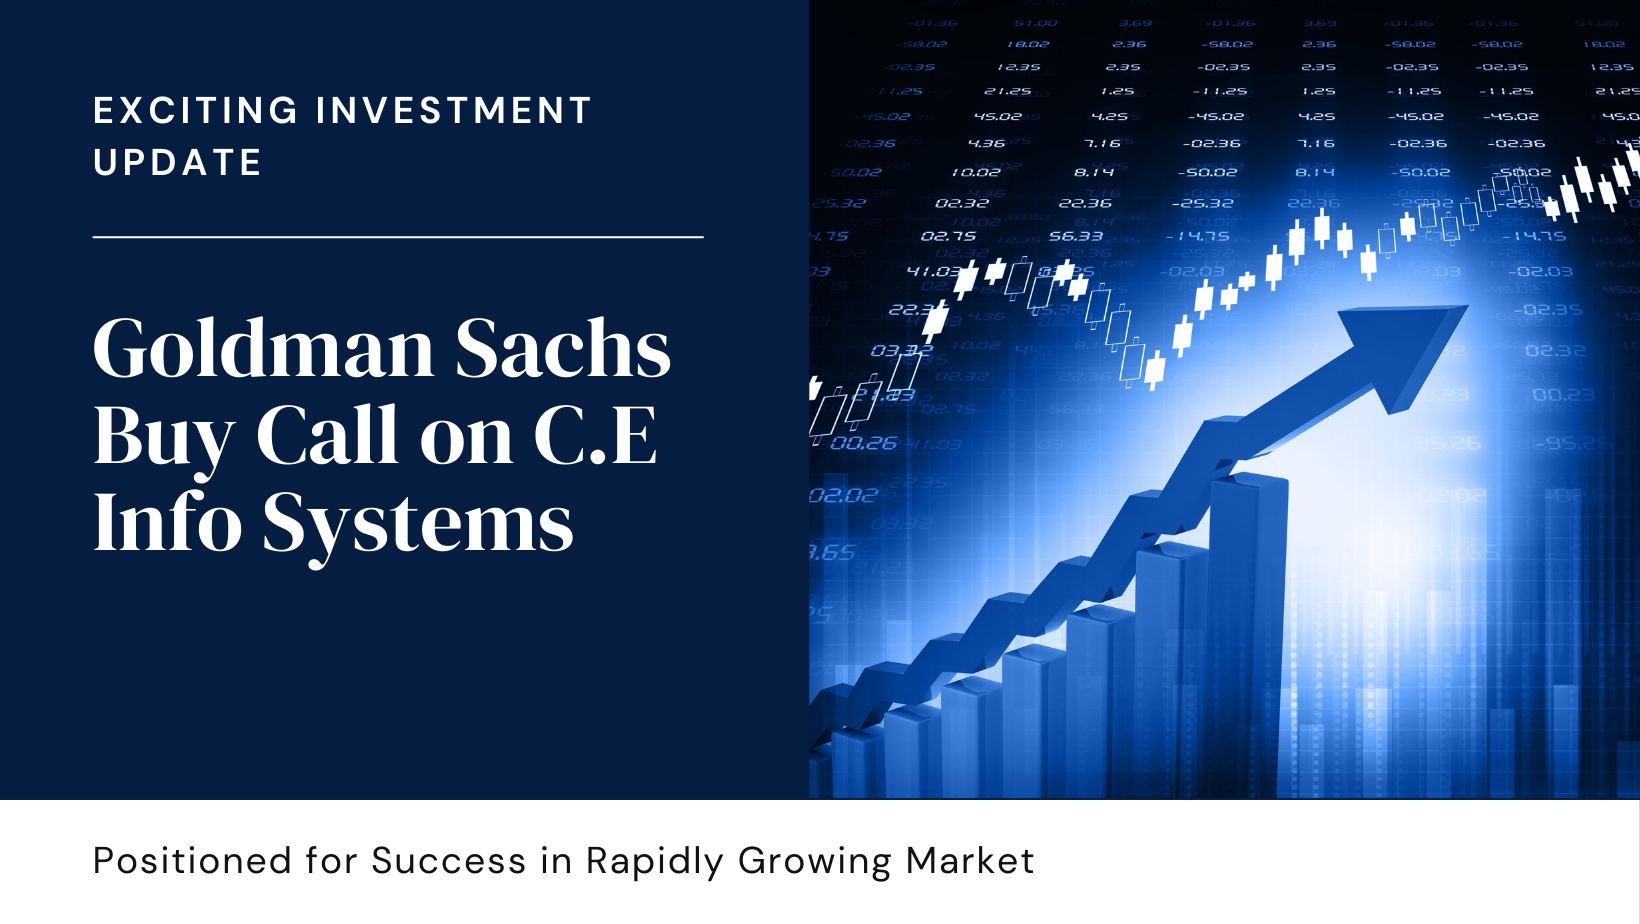 Goldman Sachs Initiates Buy Call on C.E Info Systems